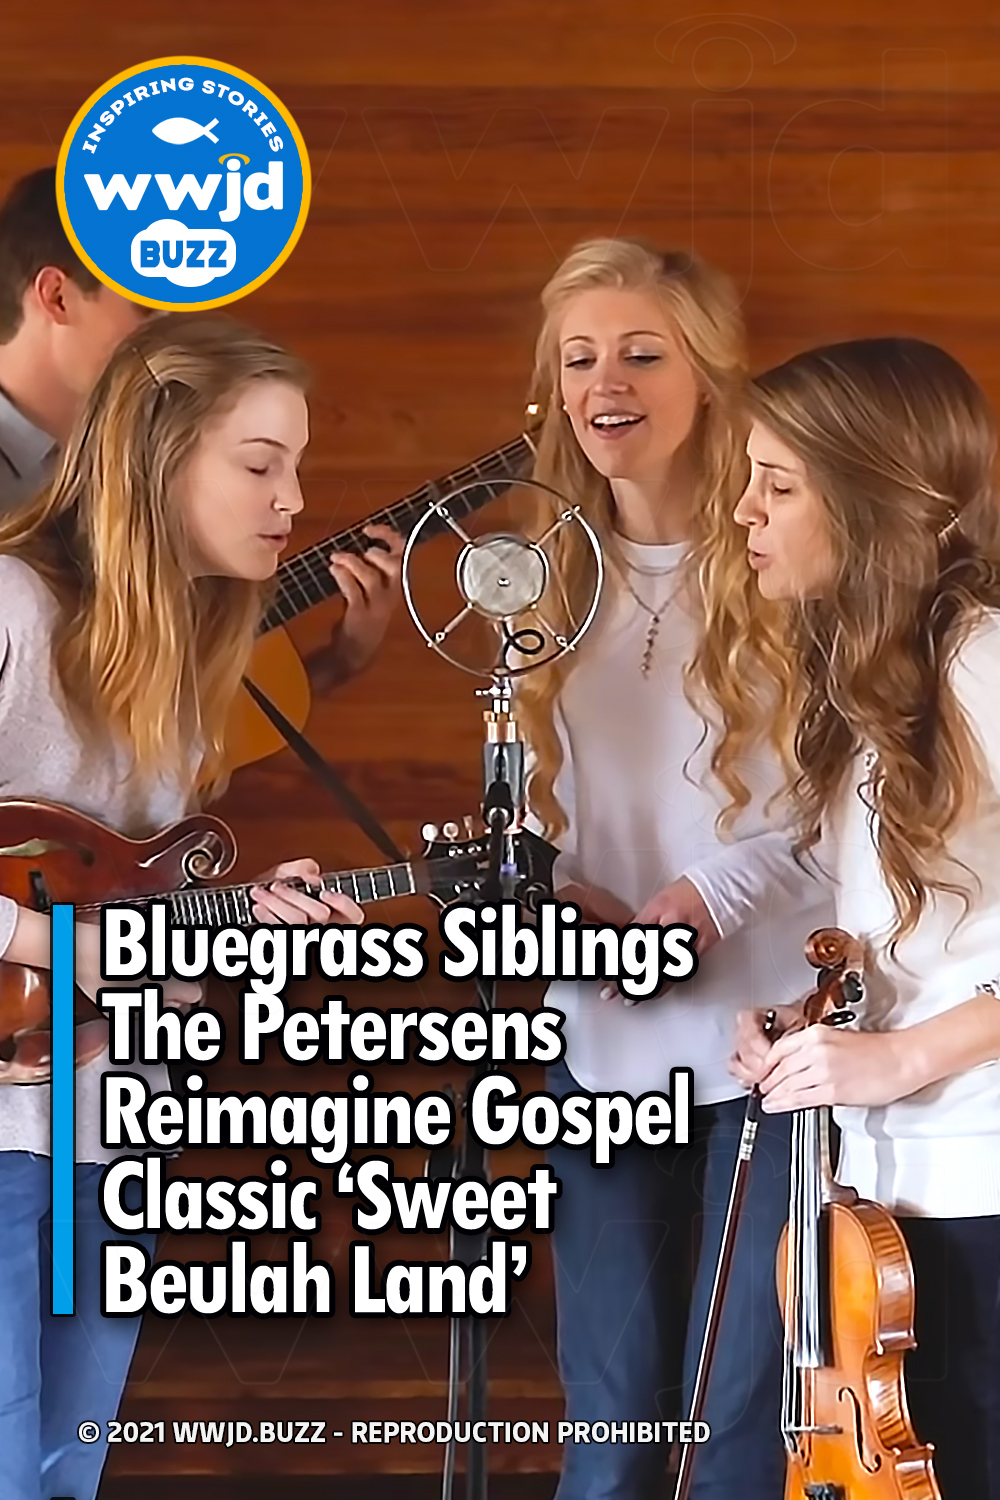 Bluegrass Siblings The Petersens Reimagine Gospel Classic ‘Sweet Beulah Land’